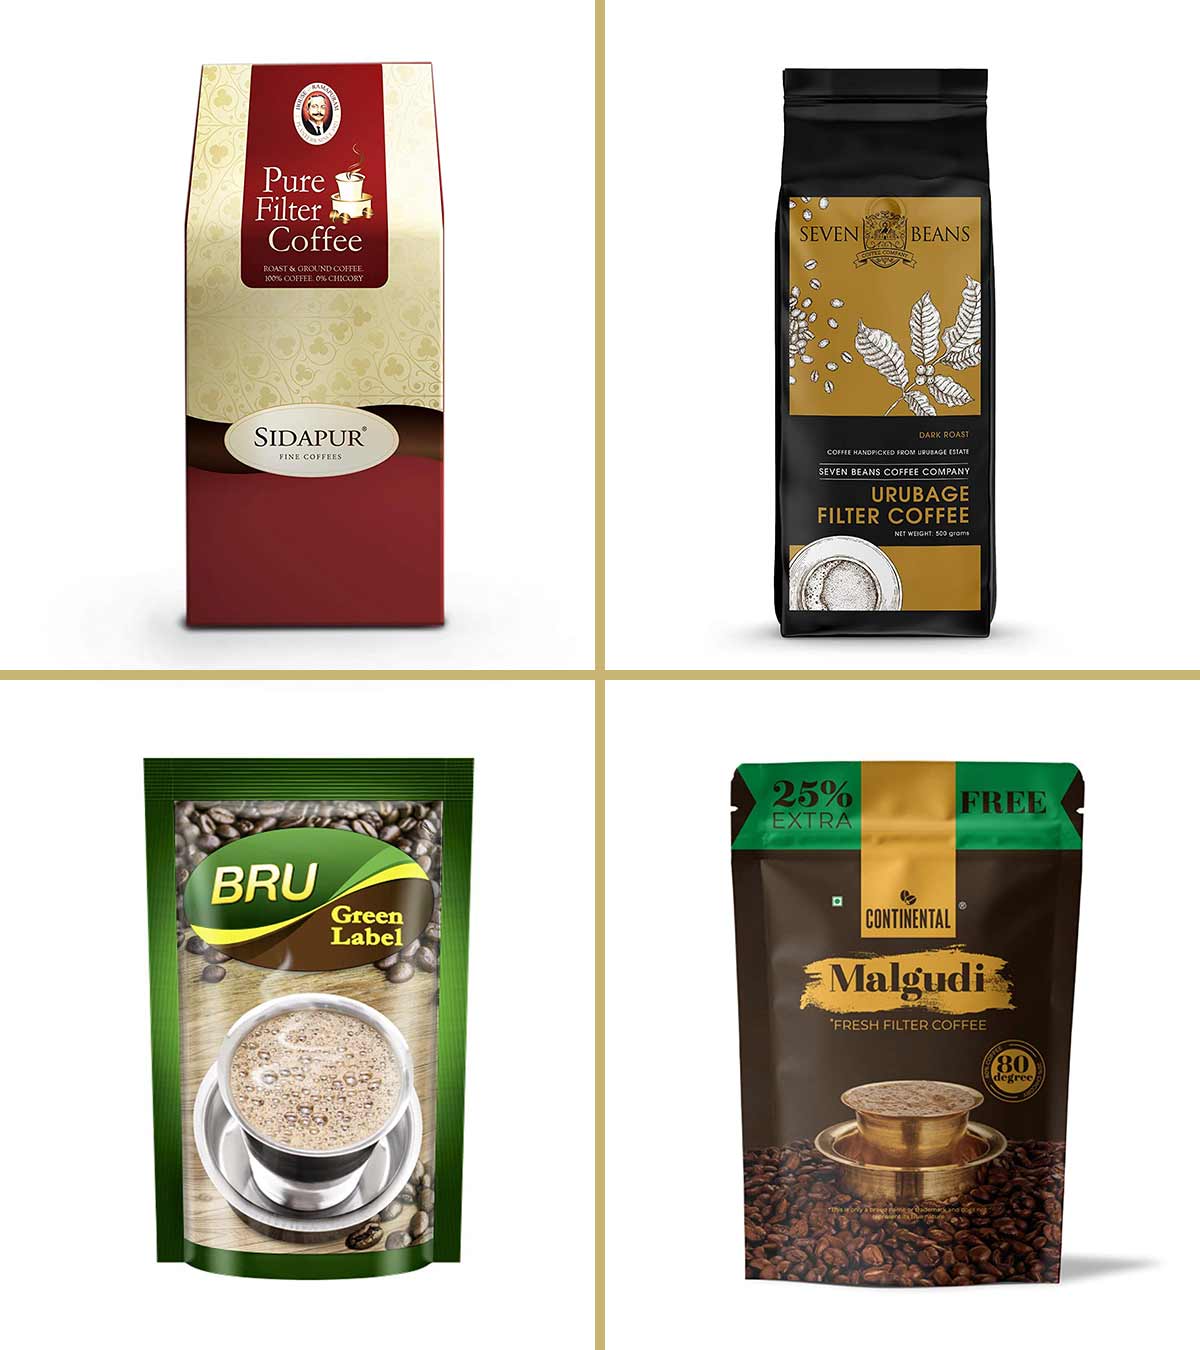 https://www.momjunction.com/wp-content/uploads/2021/05/11-Best-Filter-Coffee-Powders-In-India-2021.jpg